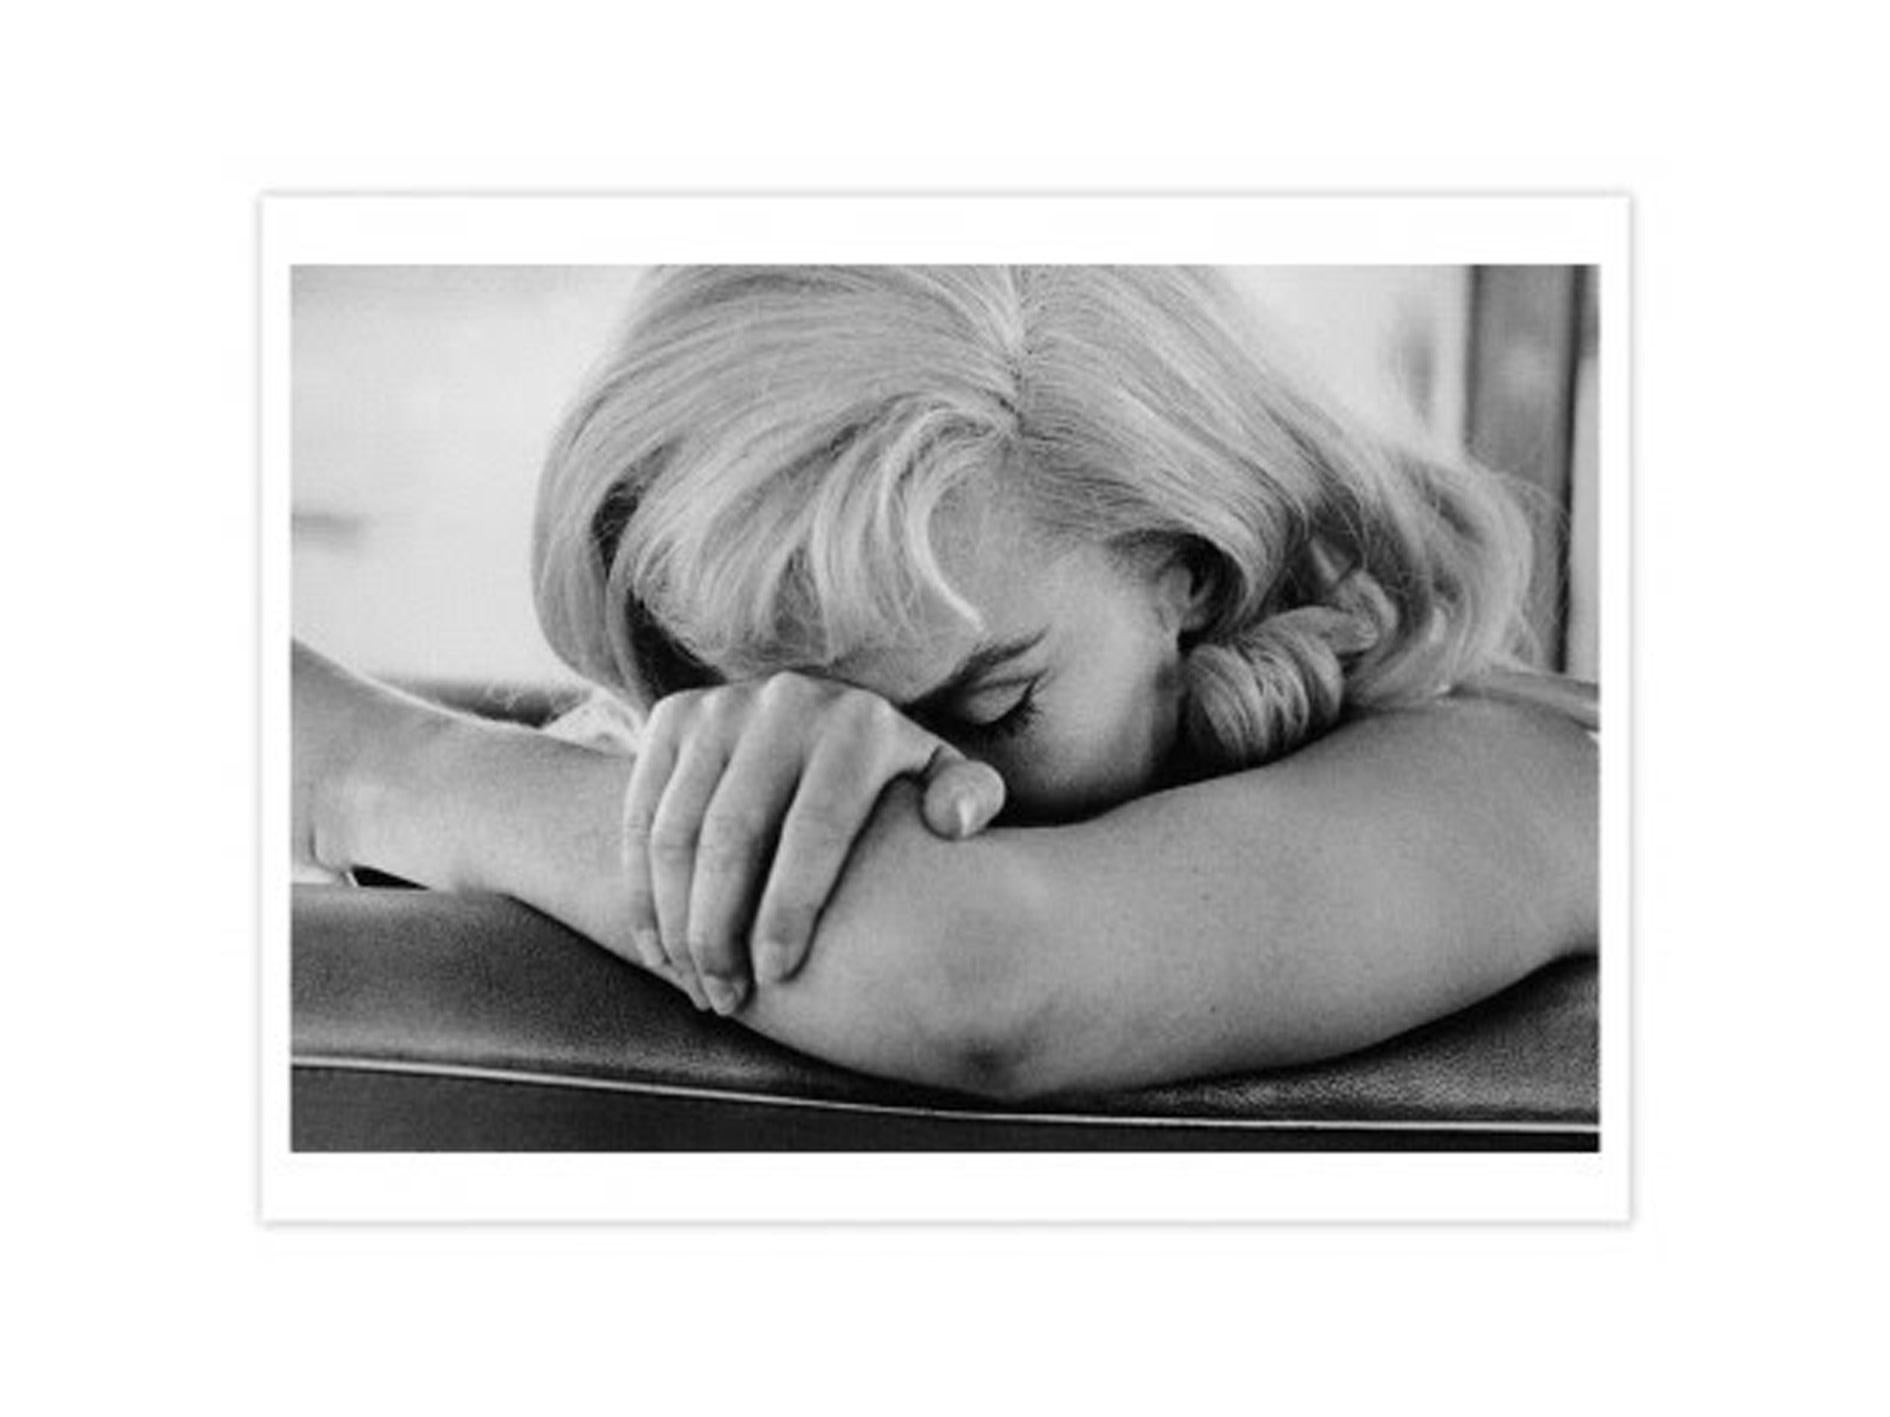 Cornell Capa Black and White Photograph - Marilyn Monroe 1960